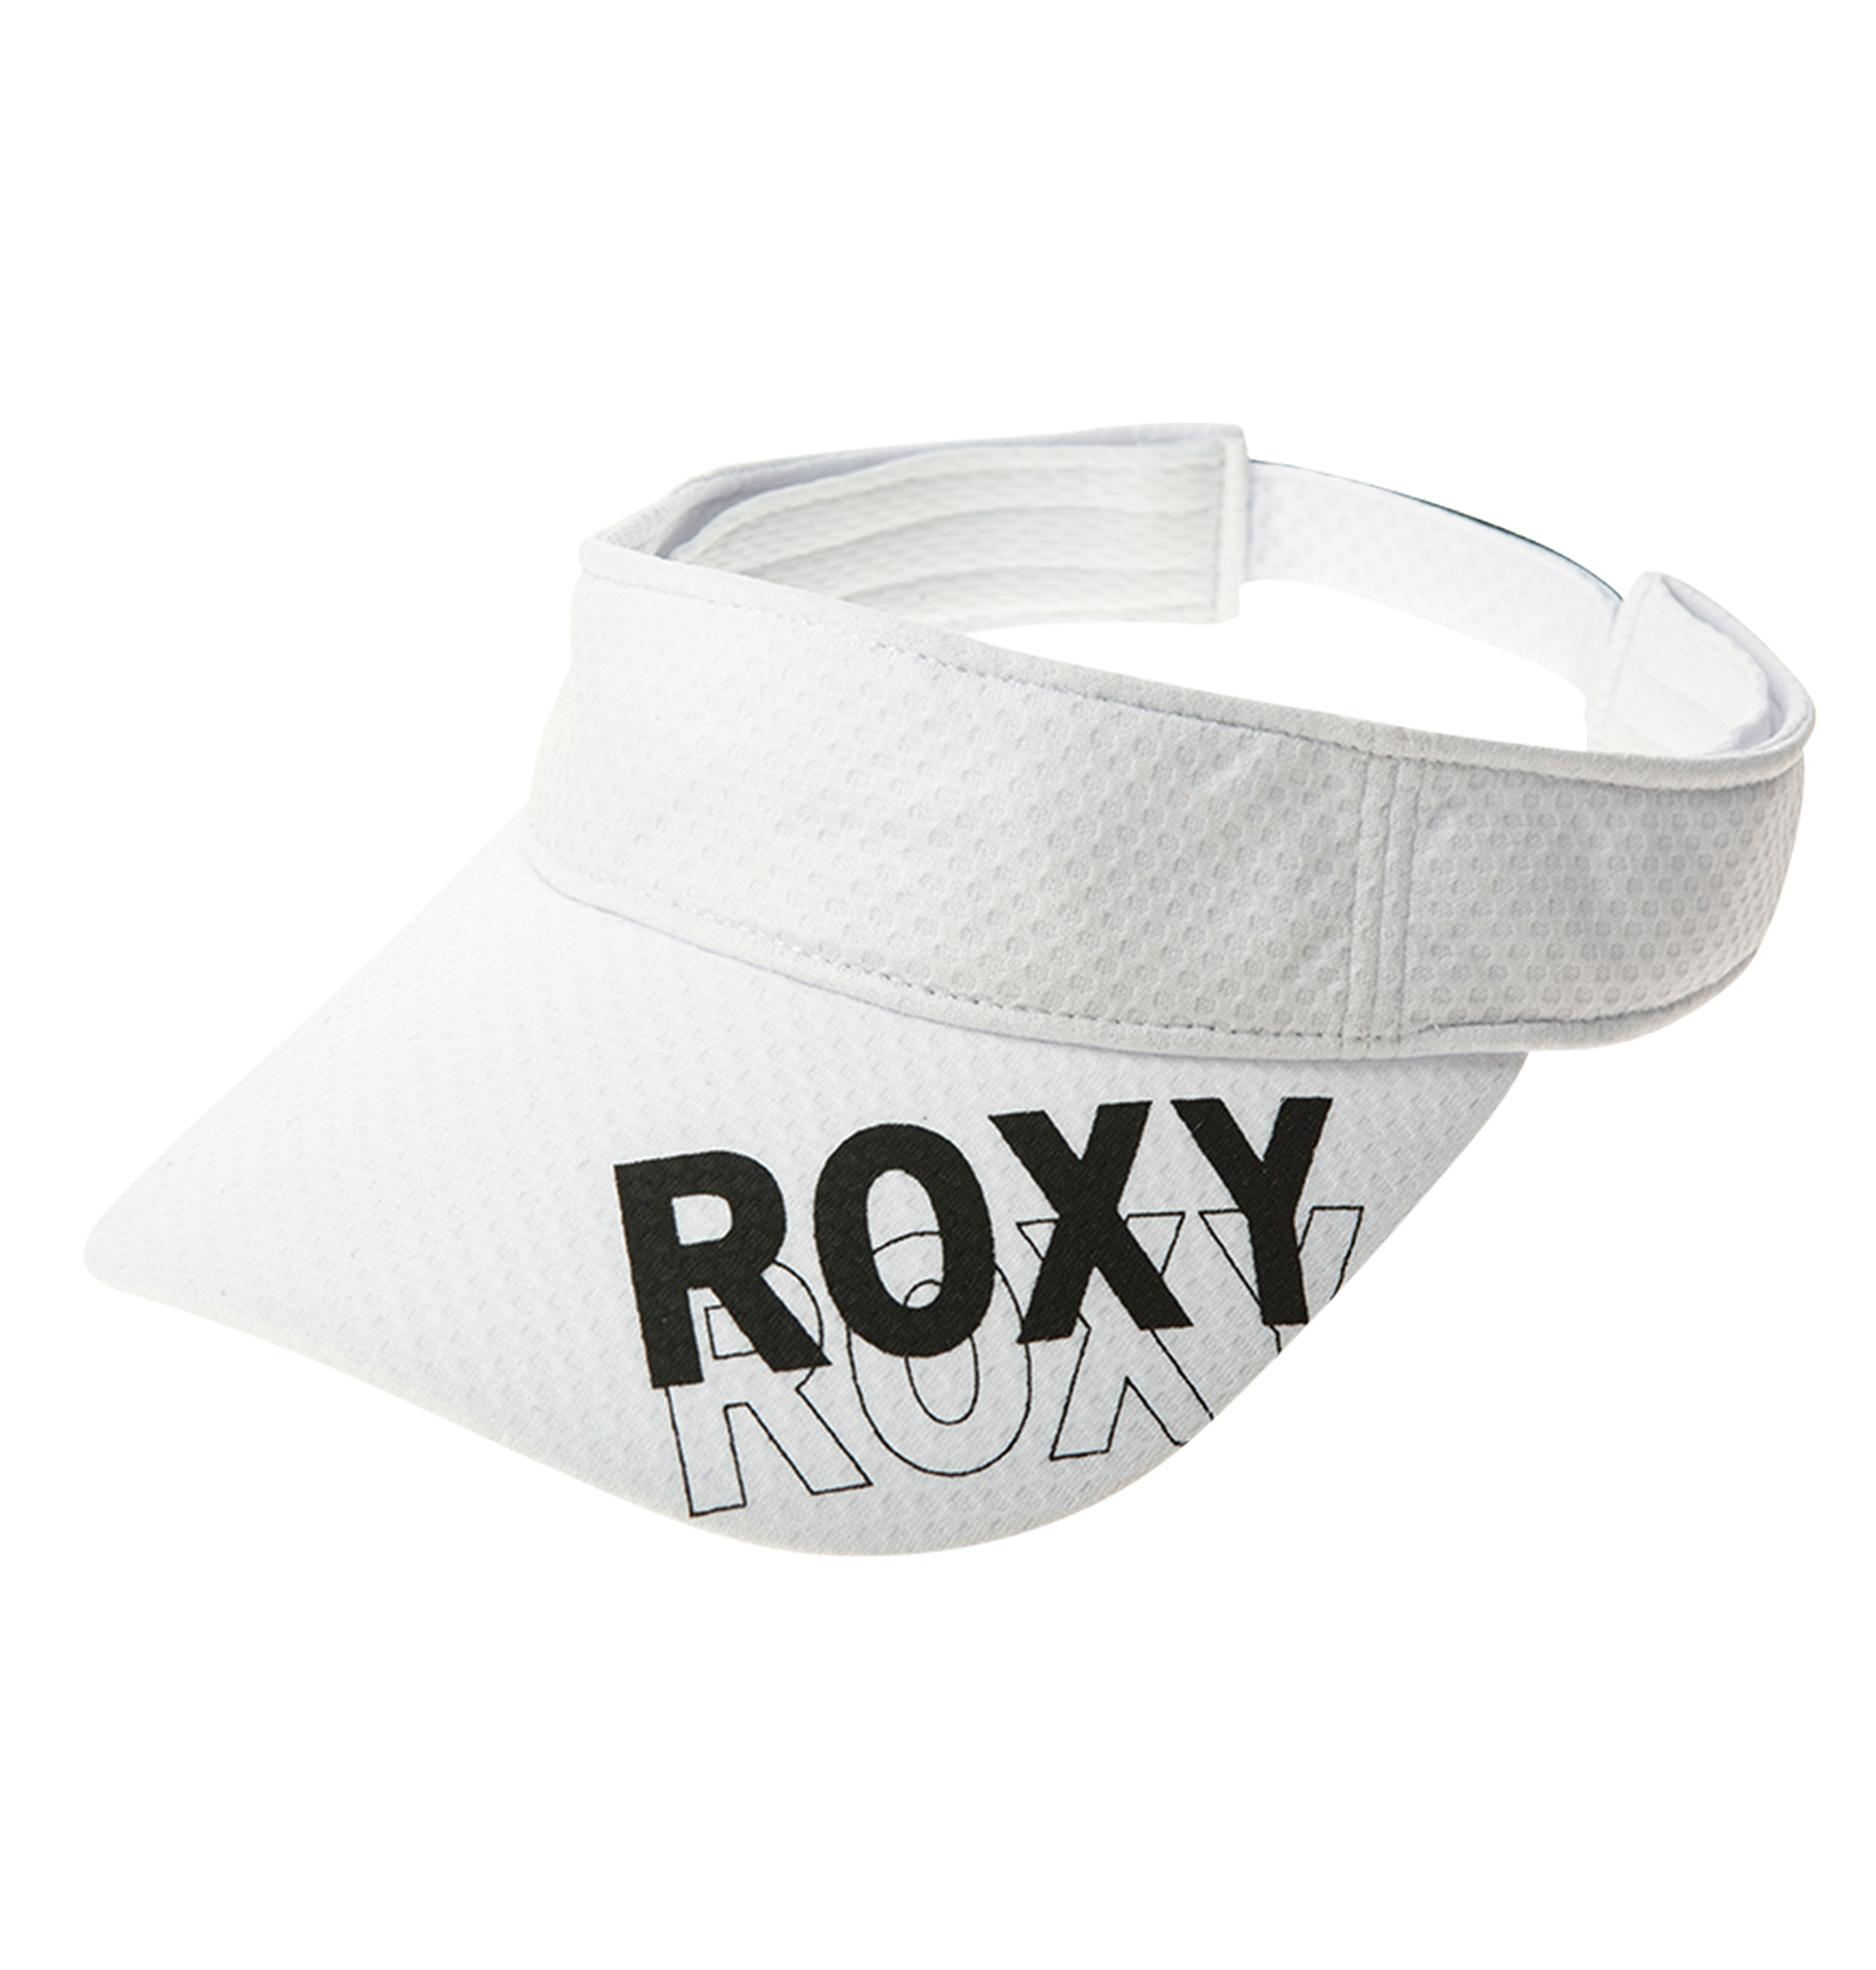 ＜Roxy＞OUT OF BREATH ブリムにプリントされた立体感のあるデザインロゴがアクティブな雰囲気を与えるサンバイザー